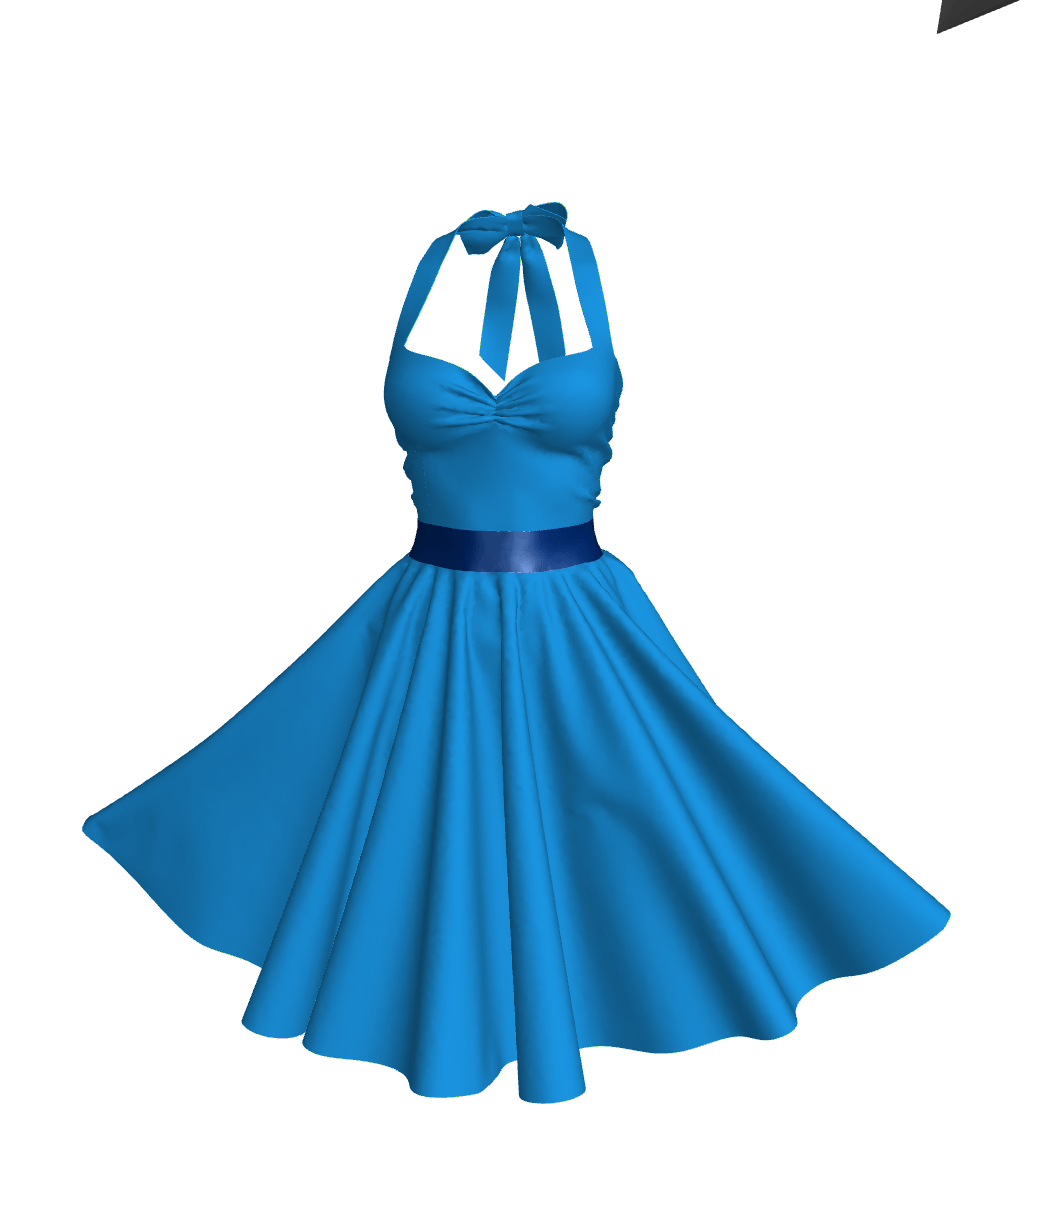 Blue Women Dress Clothes Hd Image - Blue Dress Png, Transparent Png -  1042x1229(#164834) - PngFind